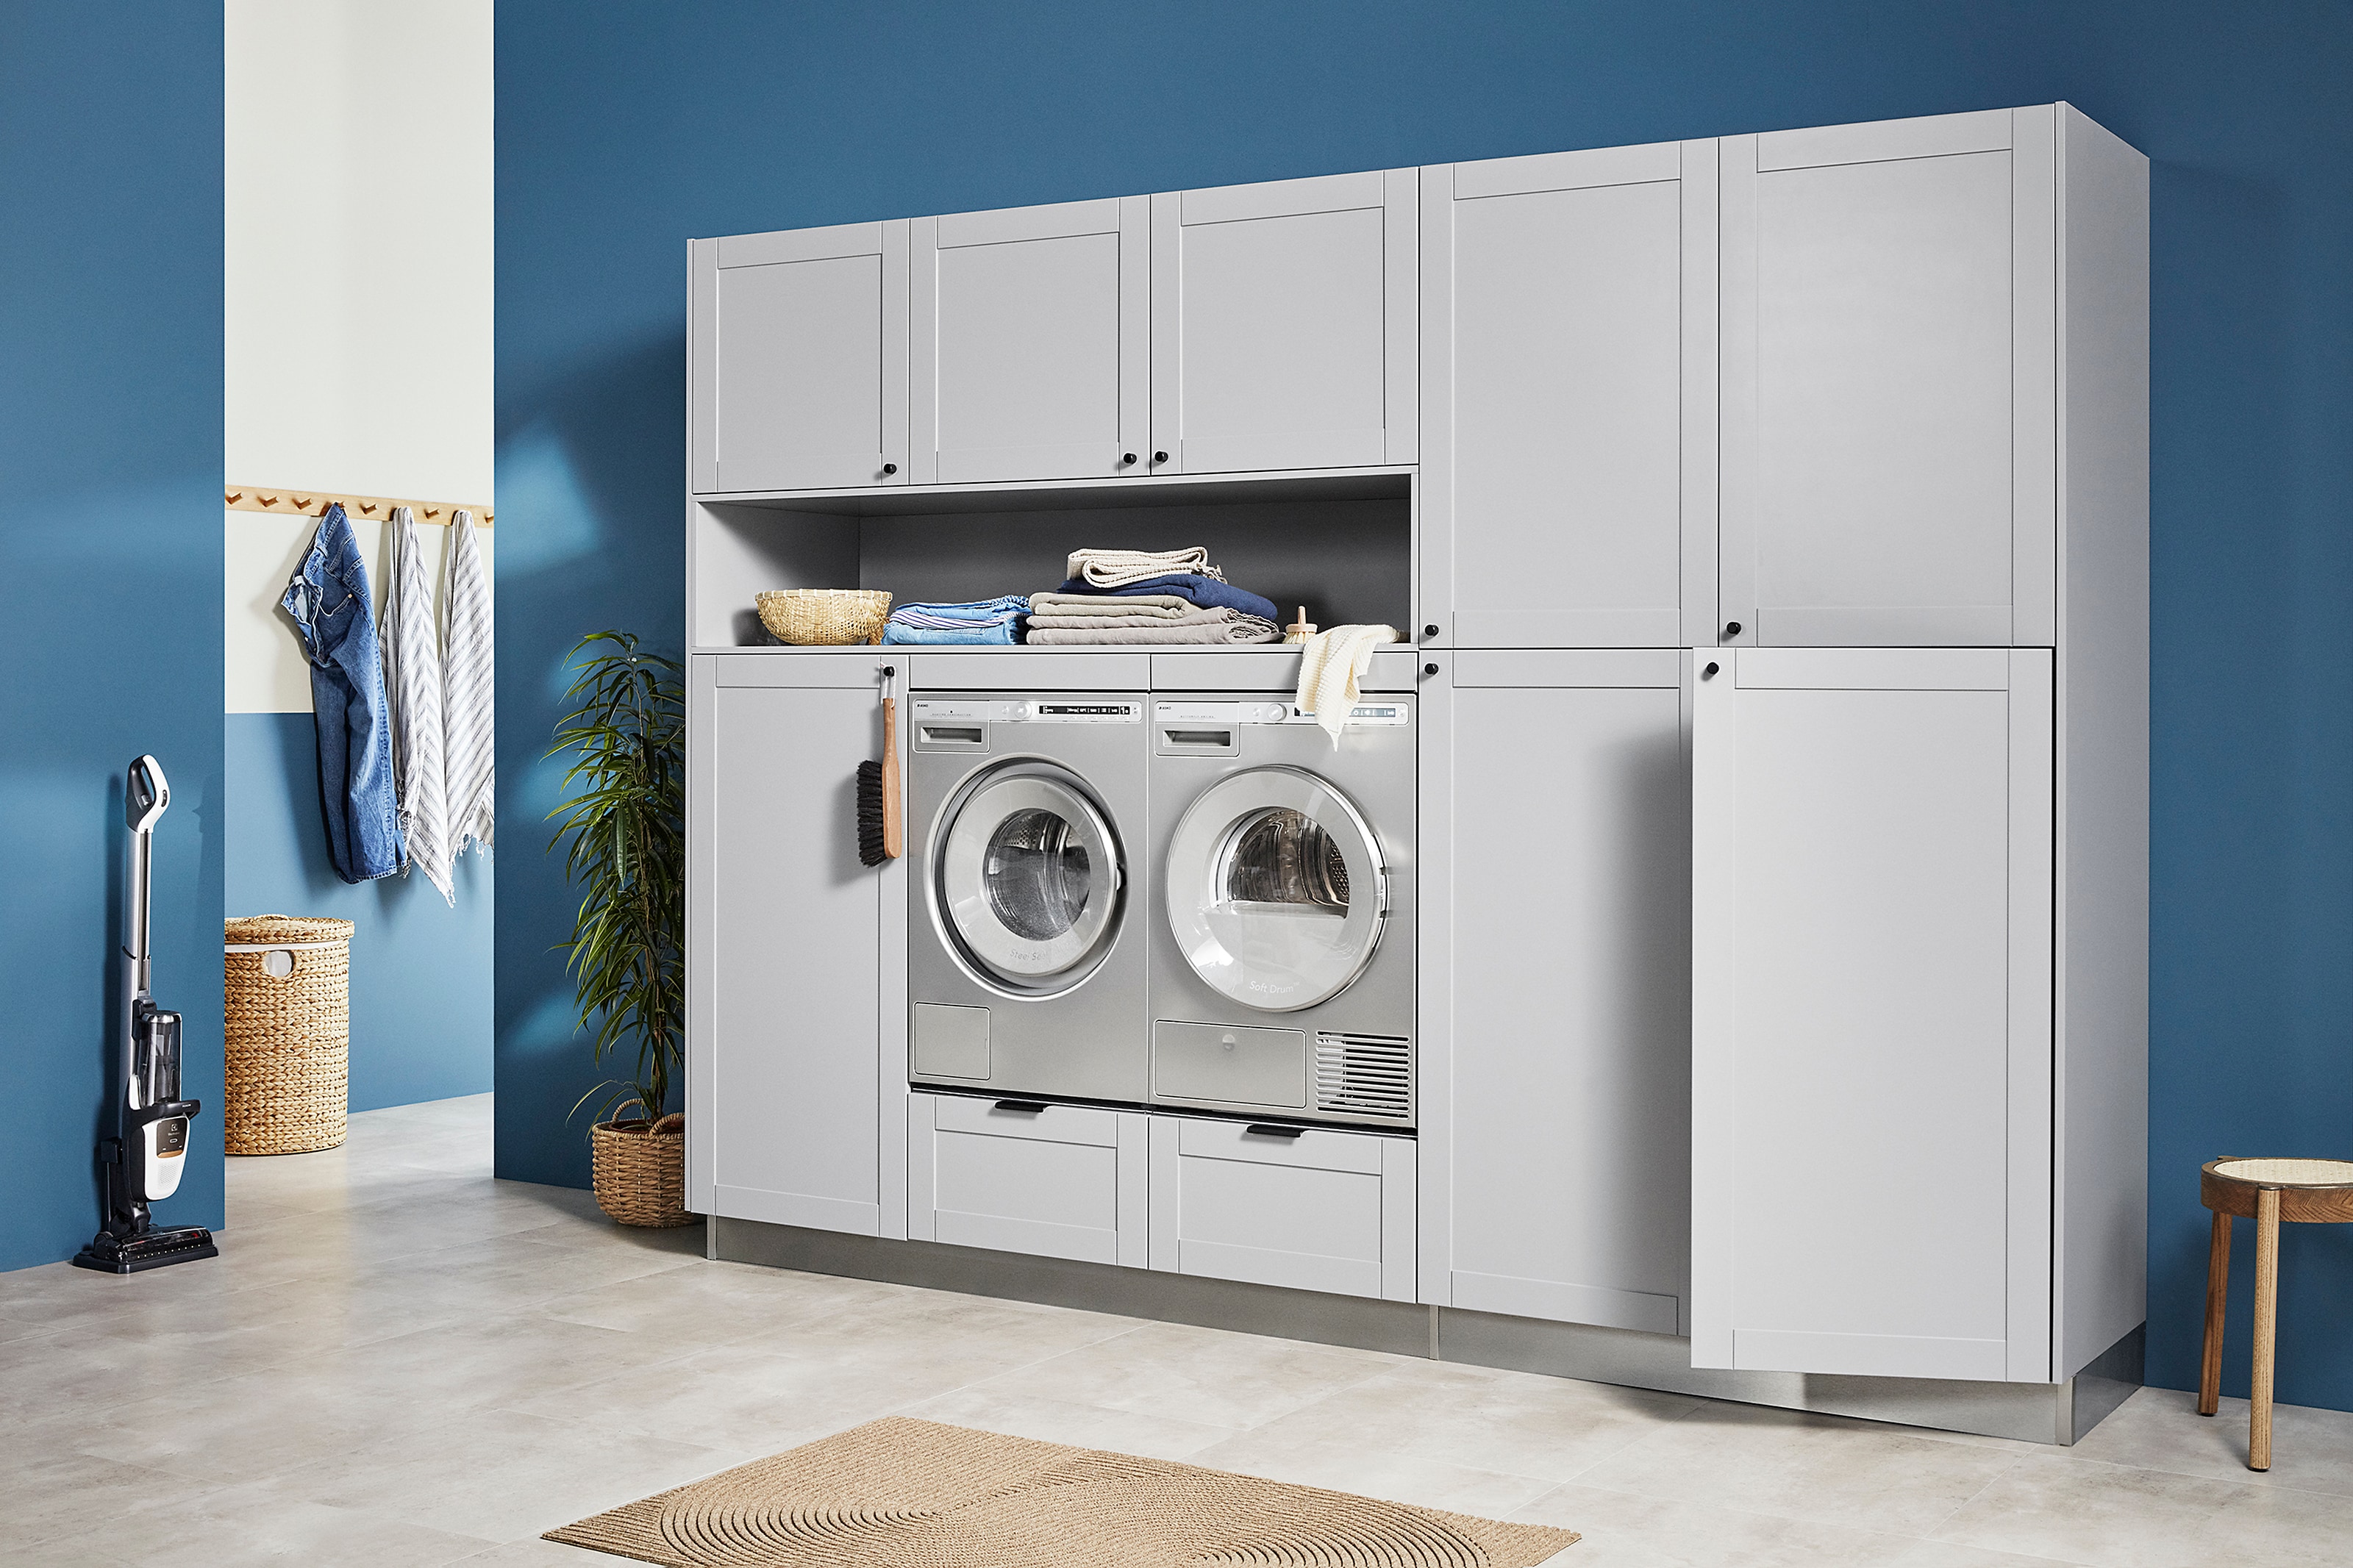 Vaskemaskin: Guider og artikler | Elkjøp